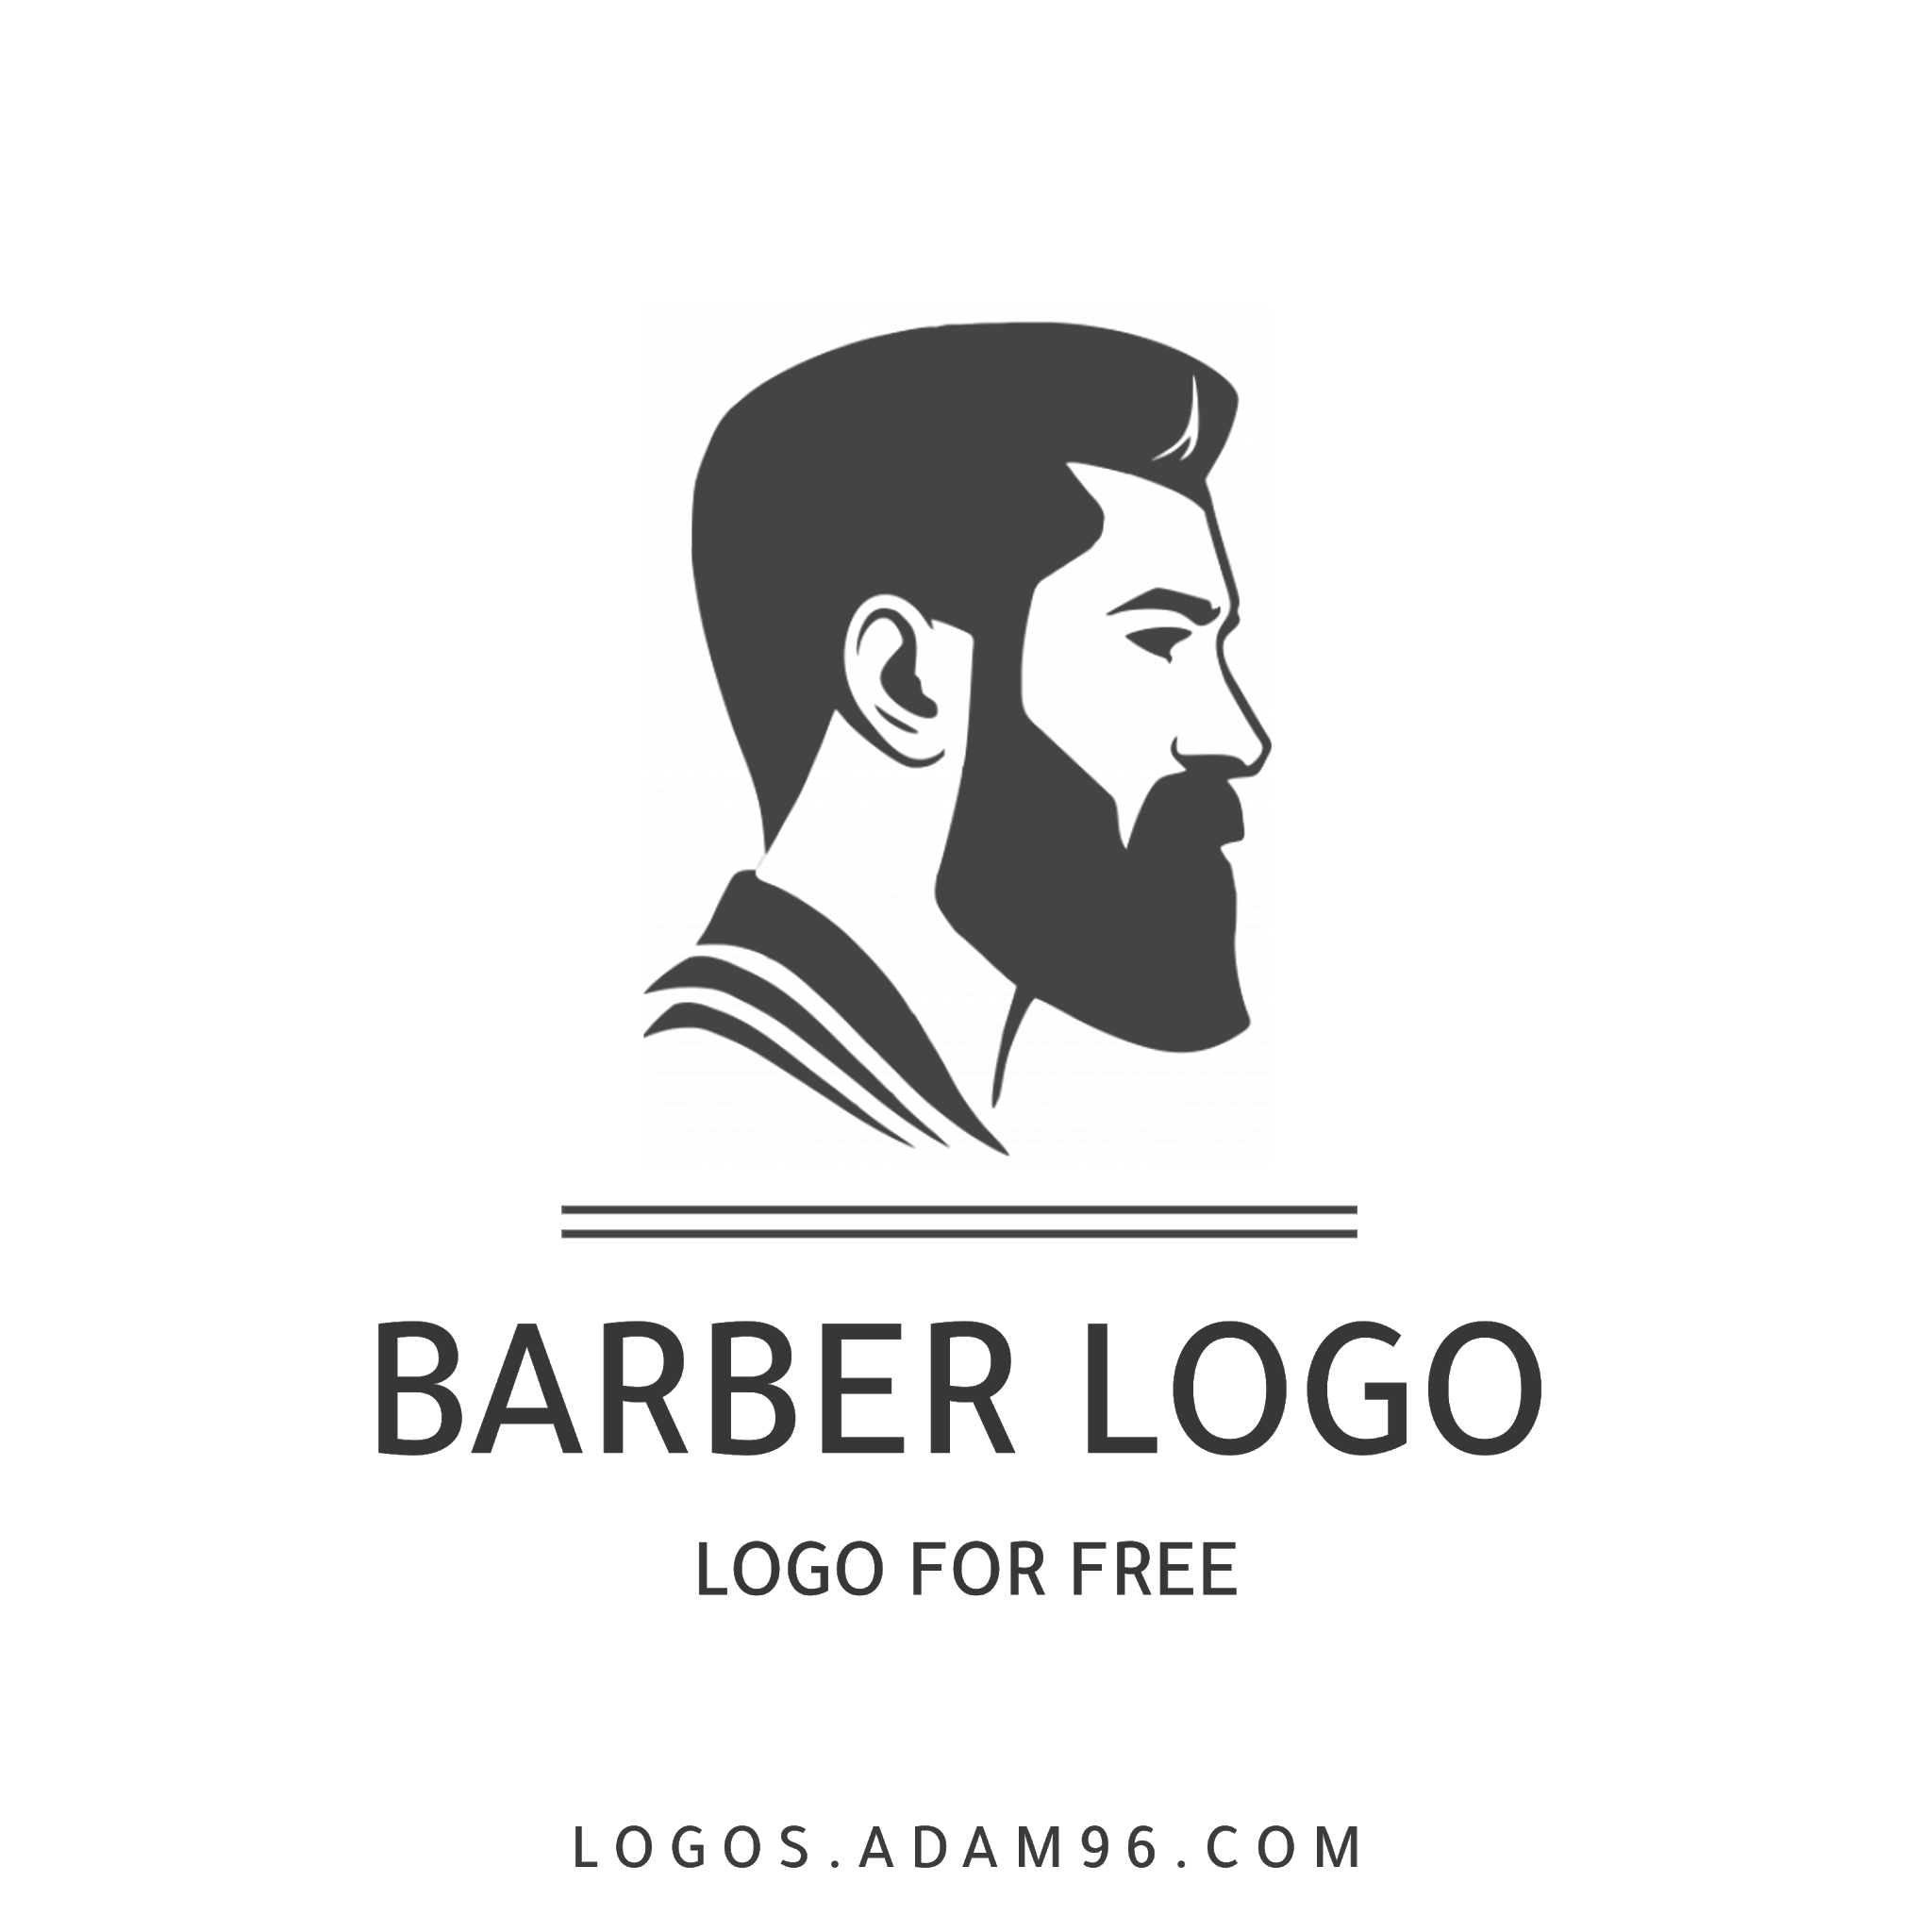 Download Barber Shop Logo Png Free Vector Download Logos